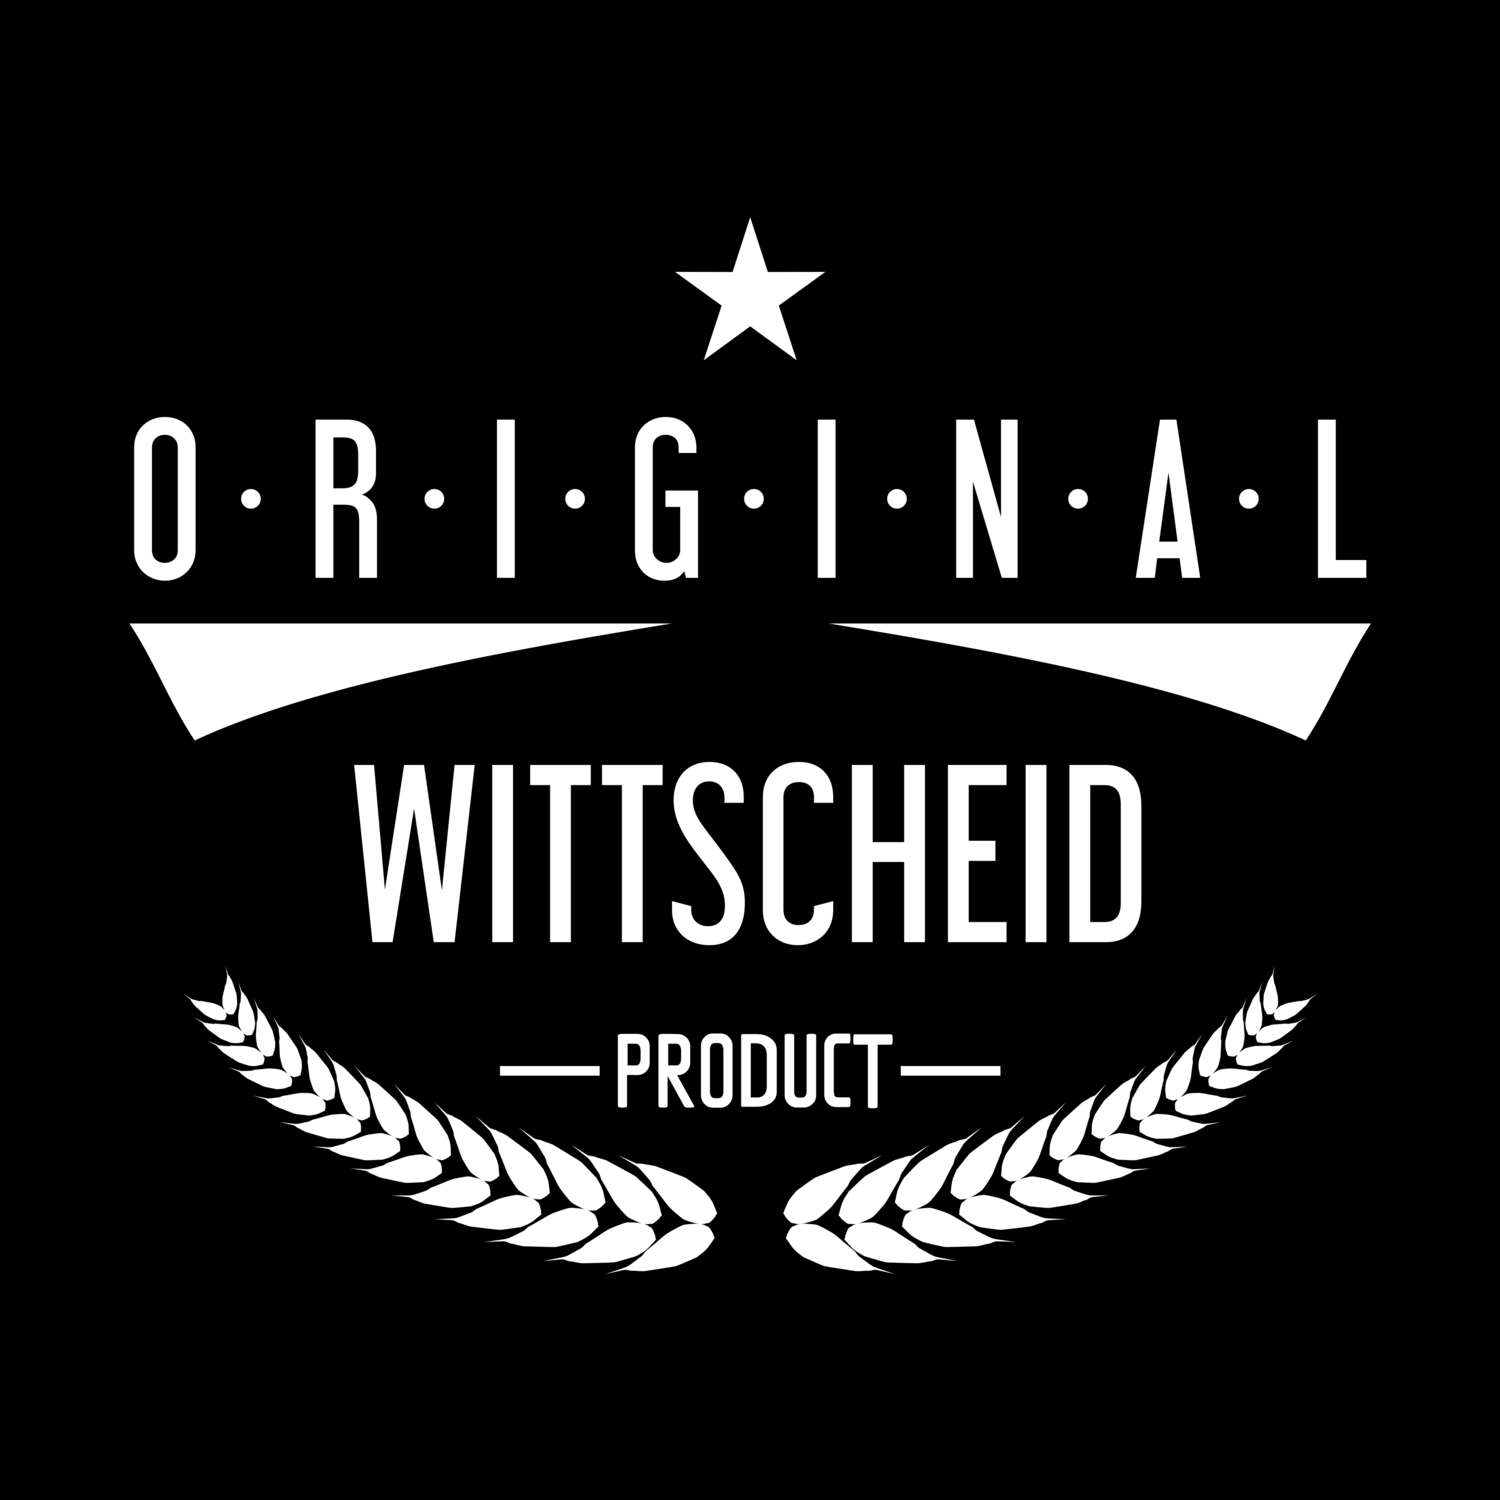 Wittscheid T-Shirt »Original Product«